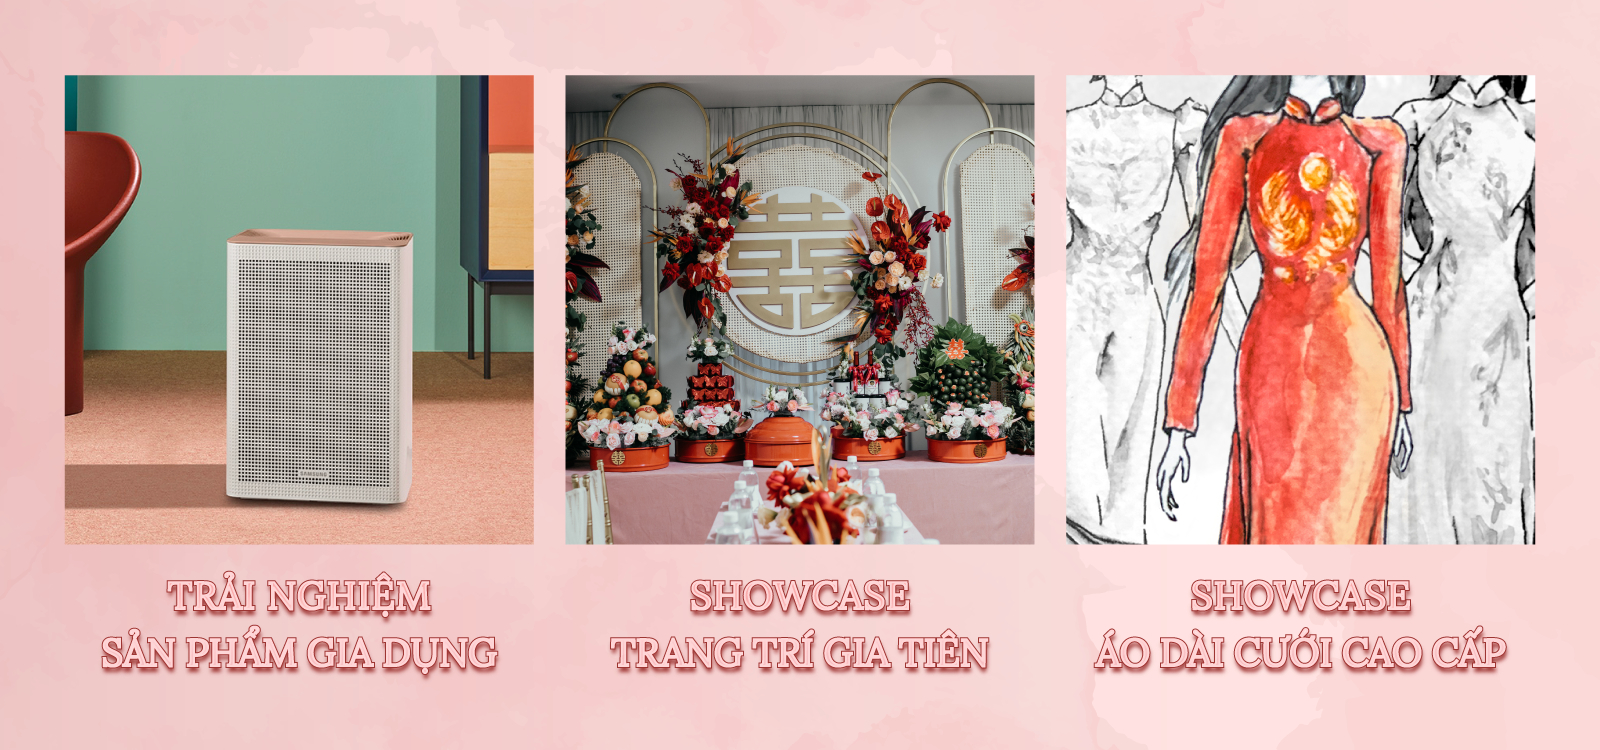 WEDDINGBOOK & Samsung - Wedding exhibition from two Korean brands - Photo 5.